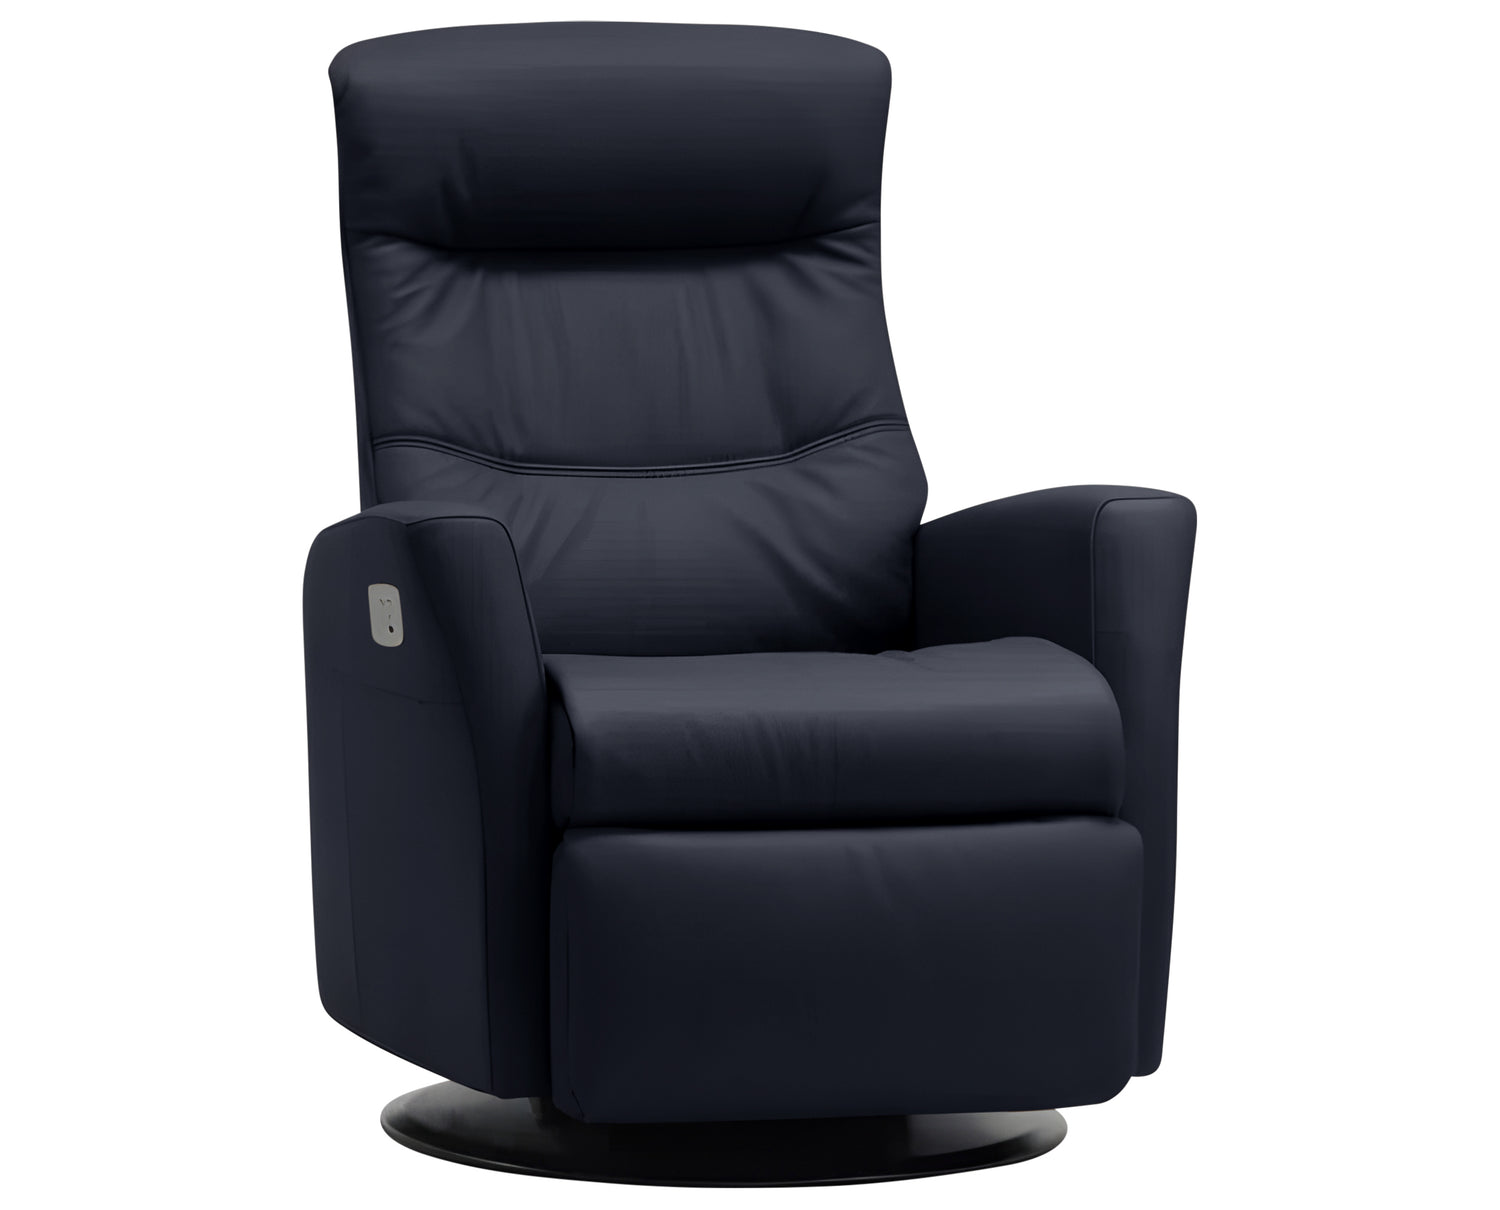 Trend Leather Tuxedo L | Norwegian Comfort Lord Recliner - Promo | Valley Ridge Furniture